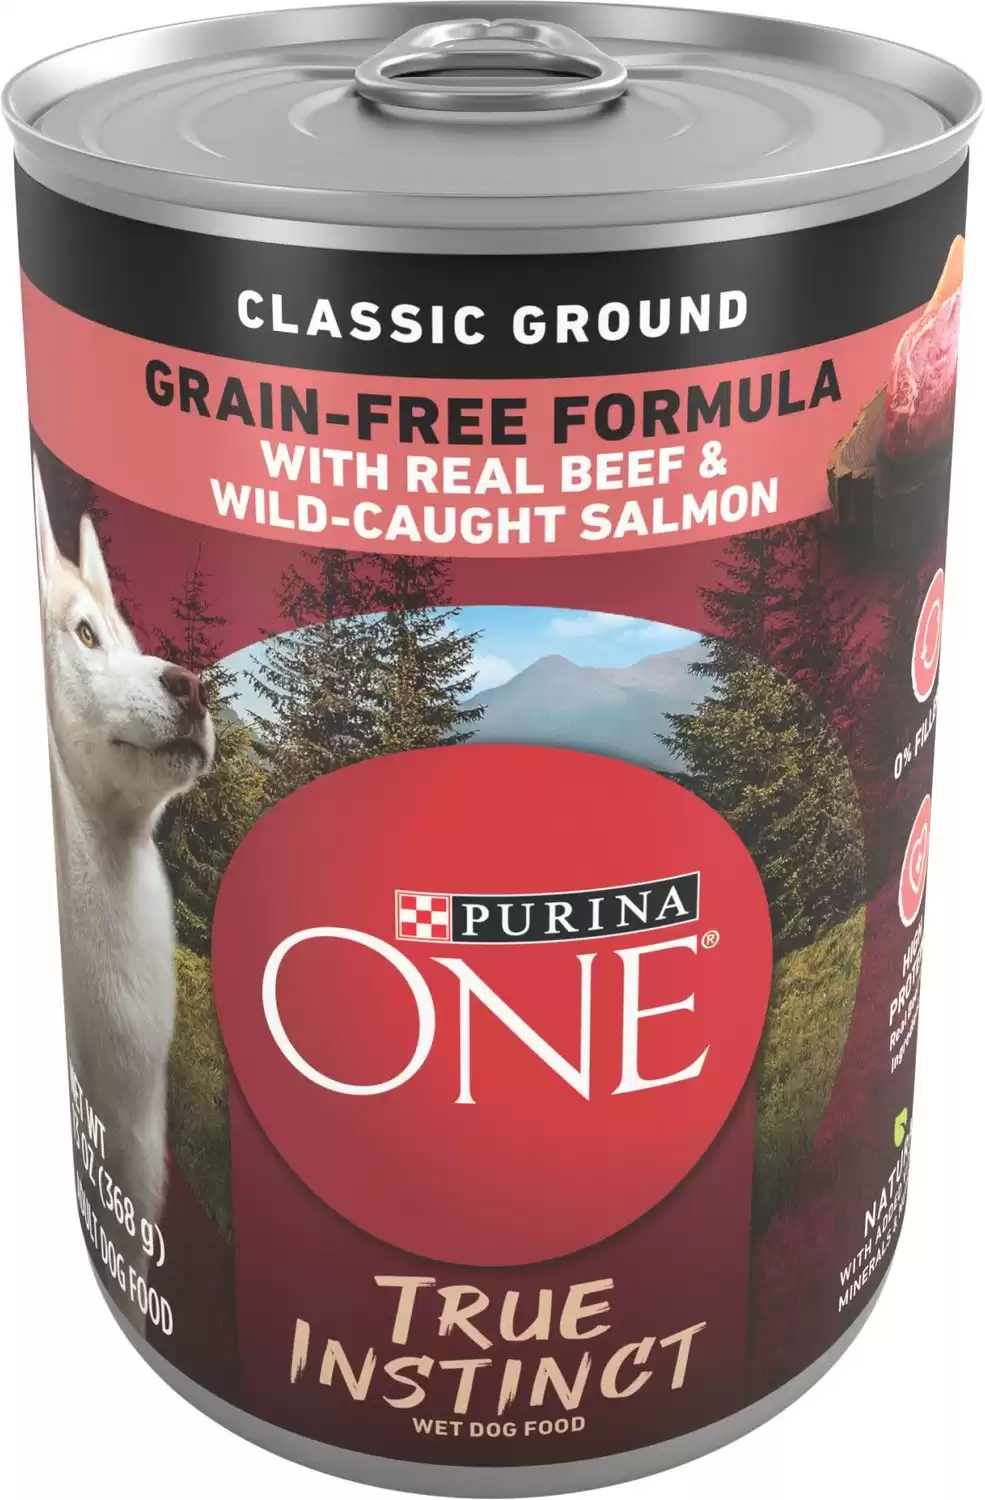 Purina ONE True Instinct Classic Ground Canned Dog Food